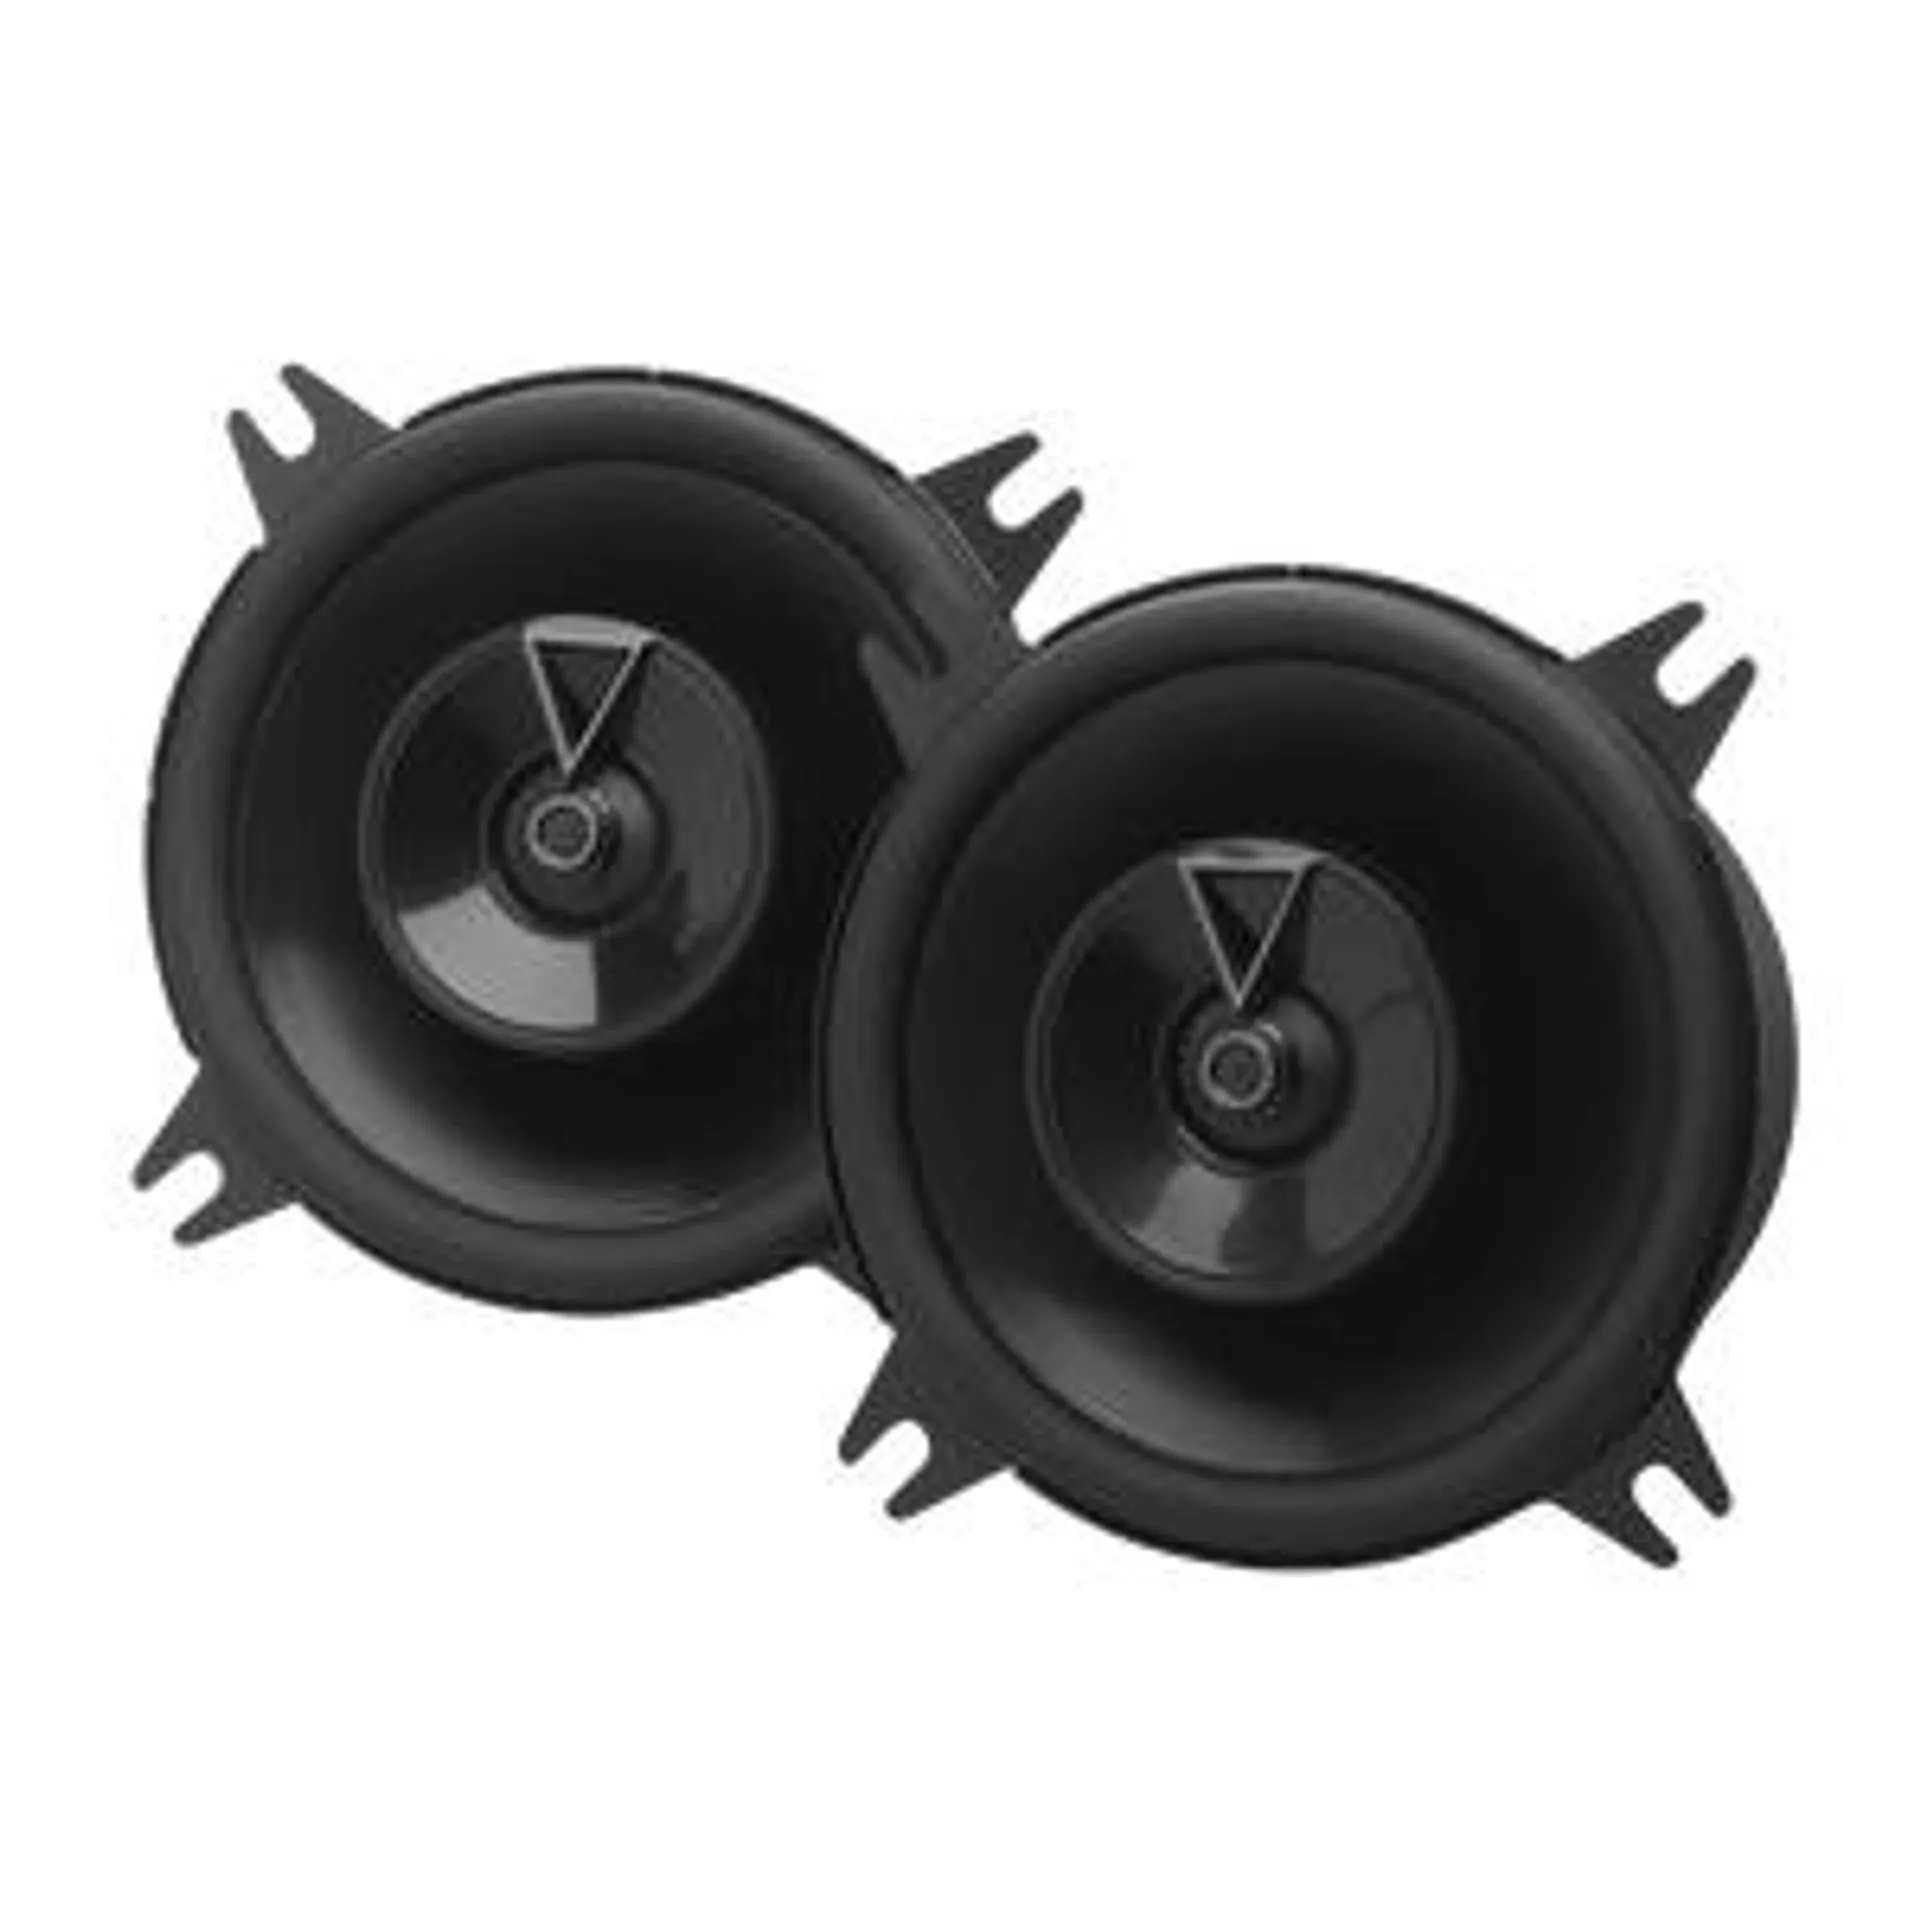 /car-speakers/CLUB44F.html?dwvar_CLUB44F_color=Black-GLOBAL-Current&cgid=car-speakers